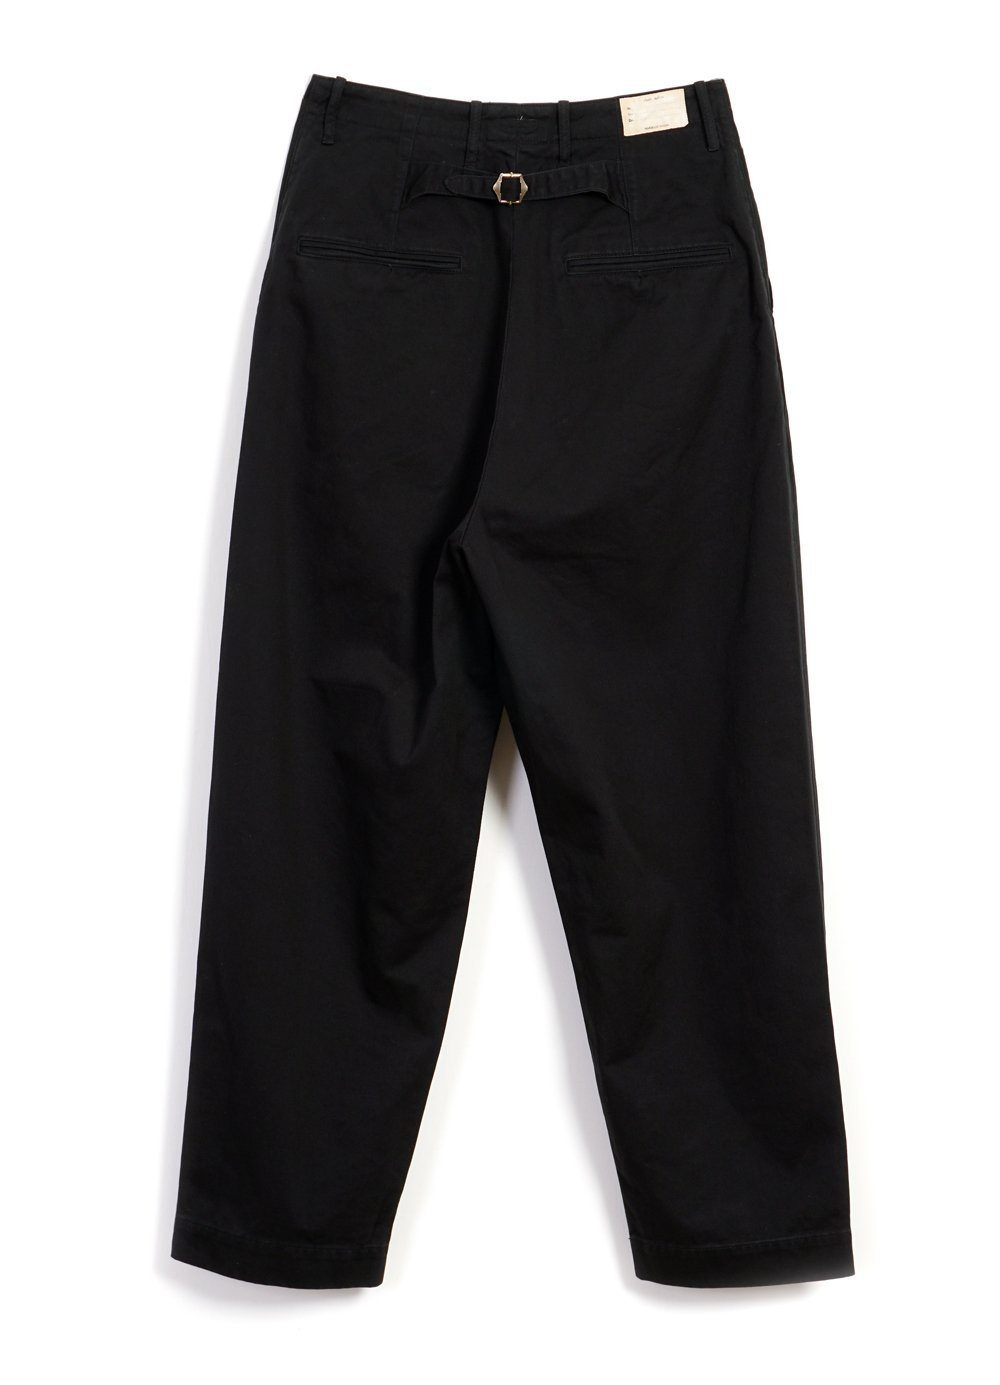 I HANSEN PANTS CHINO BLACK | Garments NIME HIGH WAISTED I